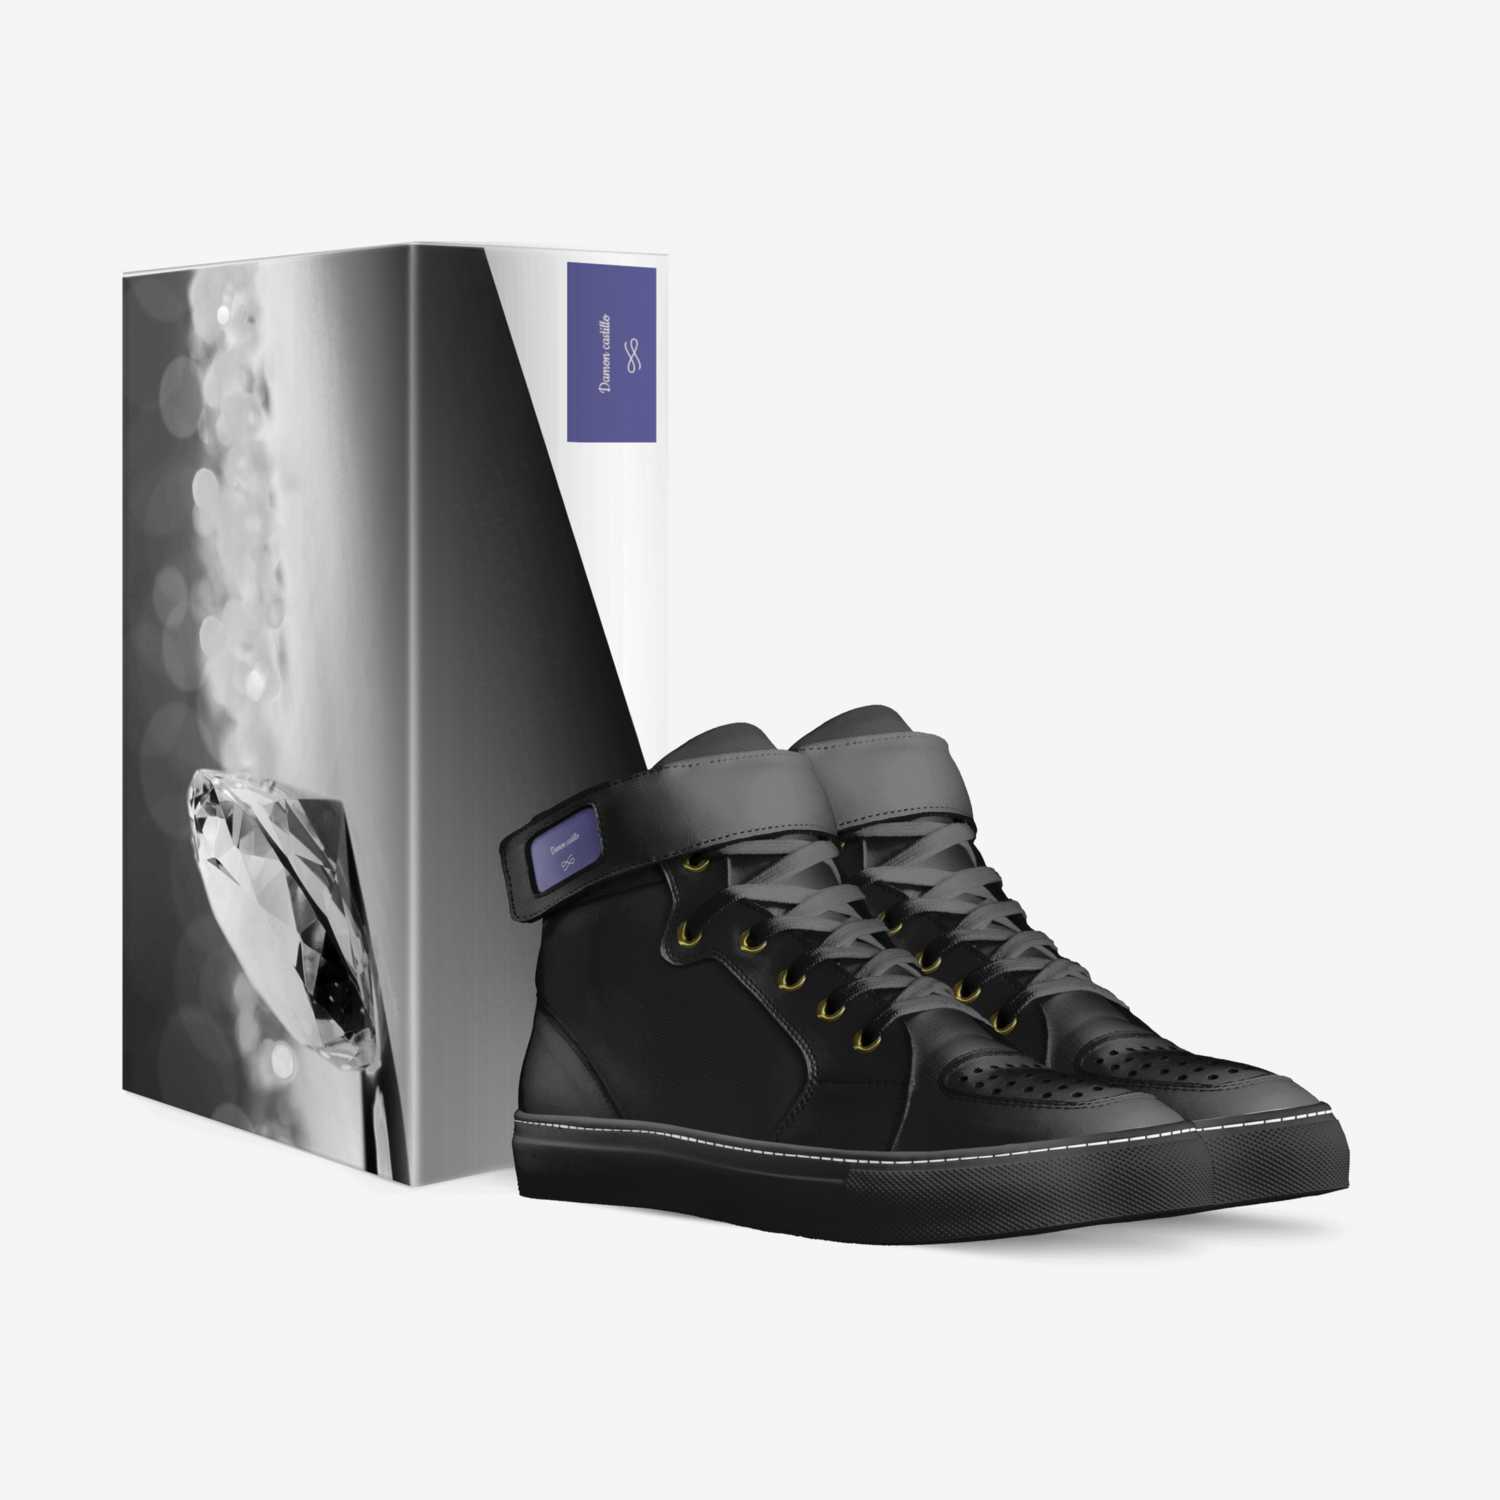 Damon castillo custom made in Italy shoes by Damon Castillo | Box view